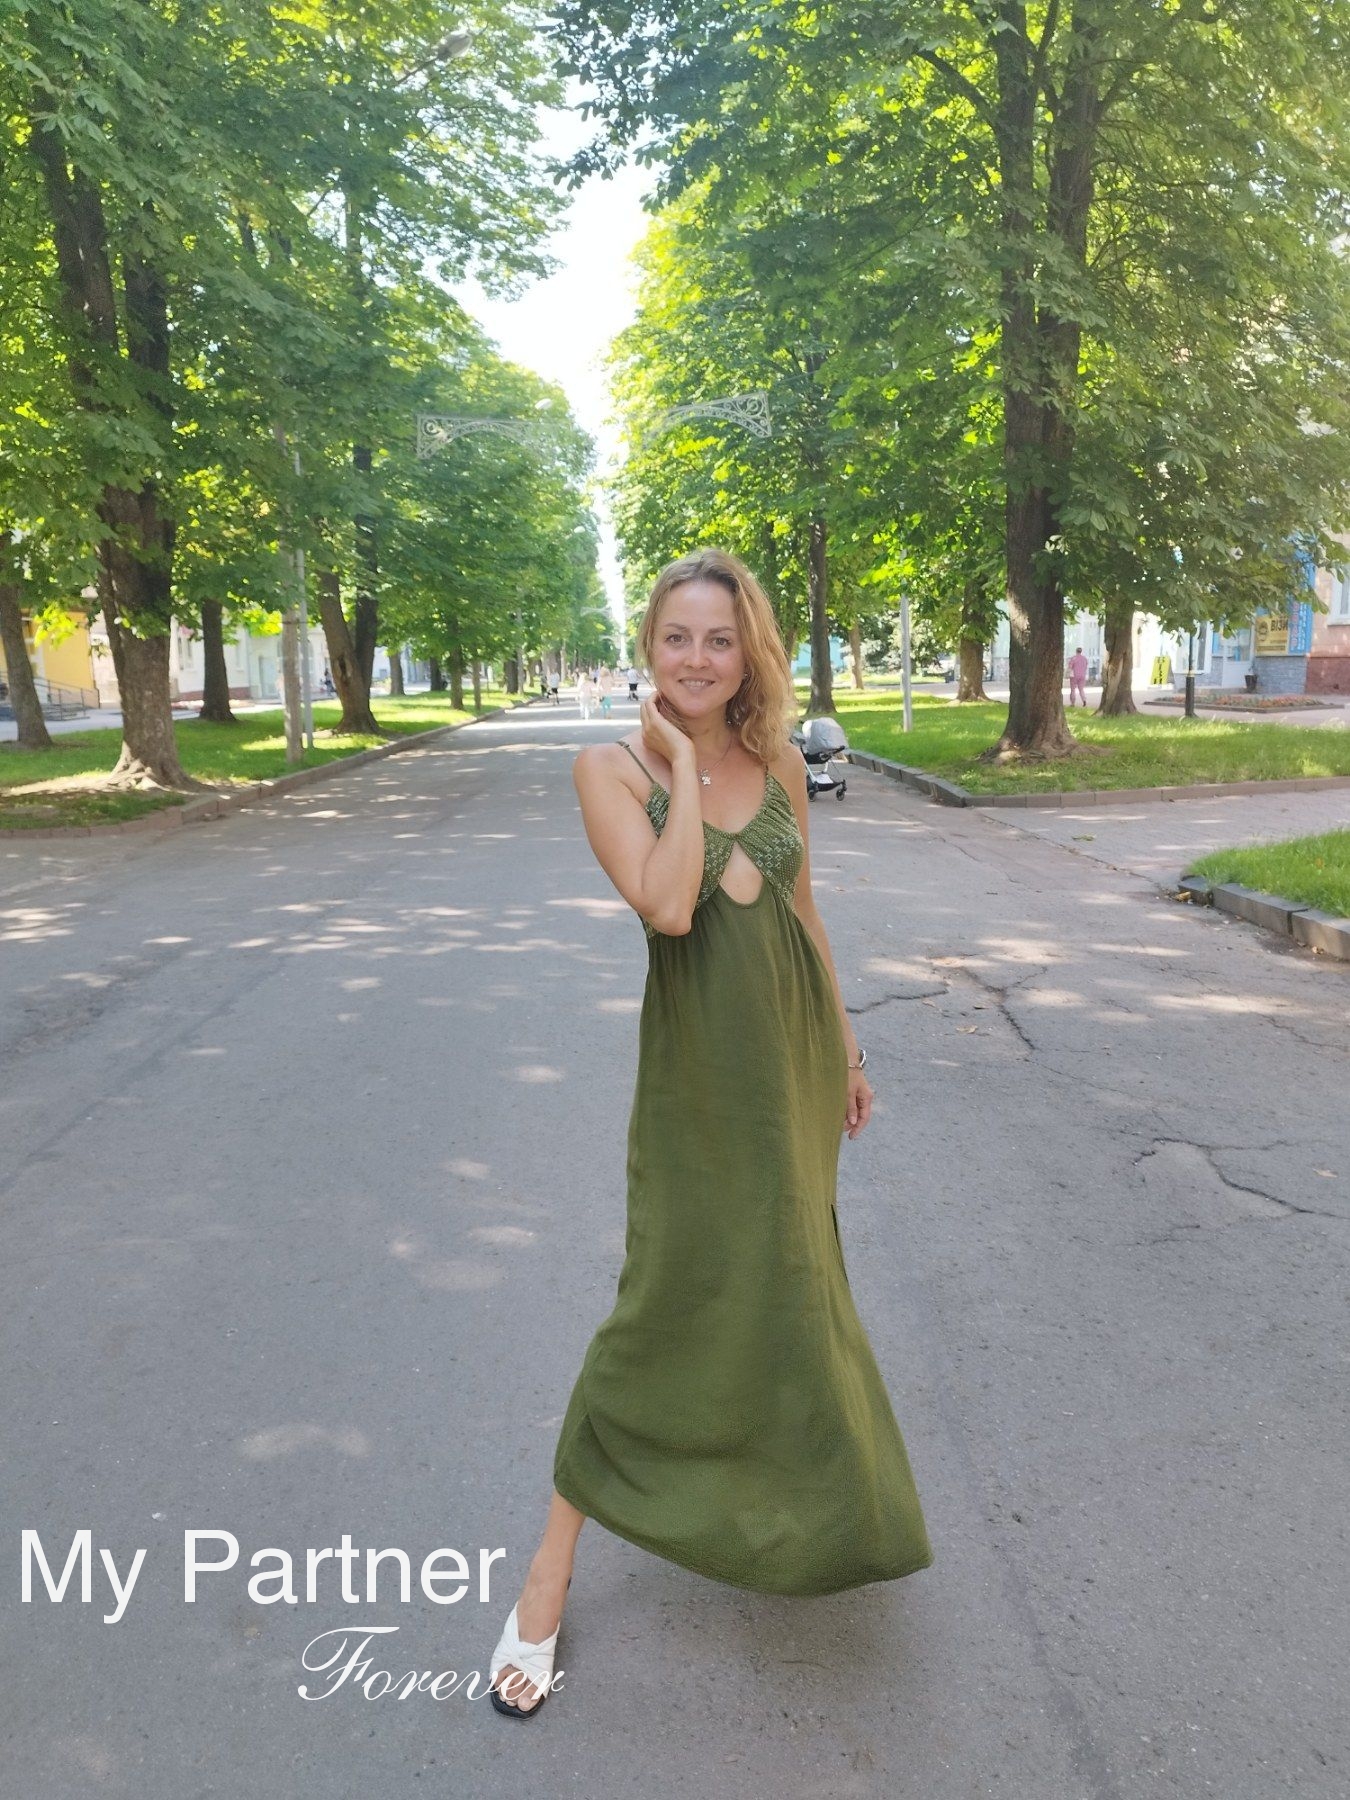 Dating Service to Meet Gorgeous Ukrainian Lady Elena from Lutsk, Ukraine